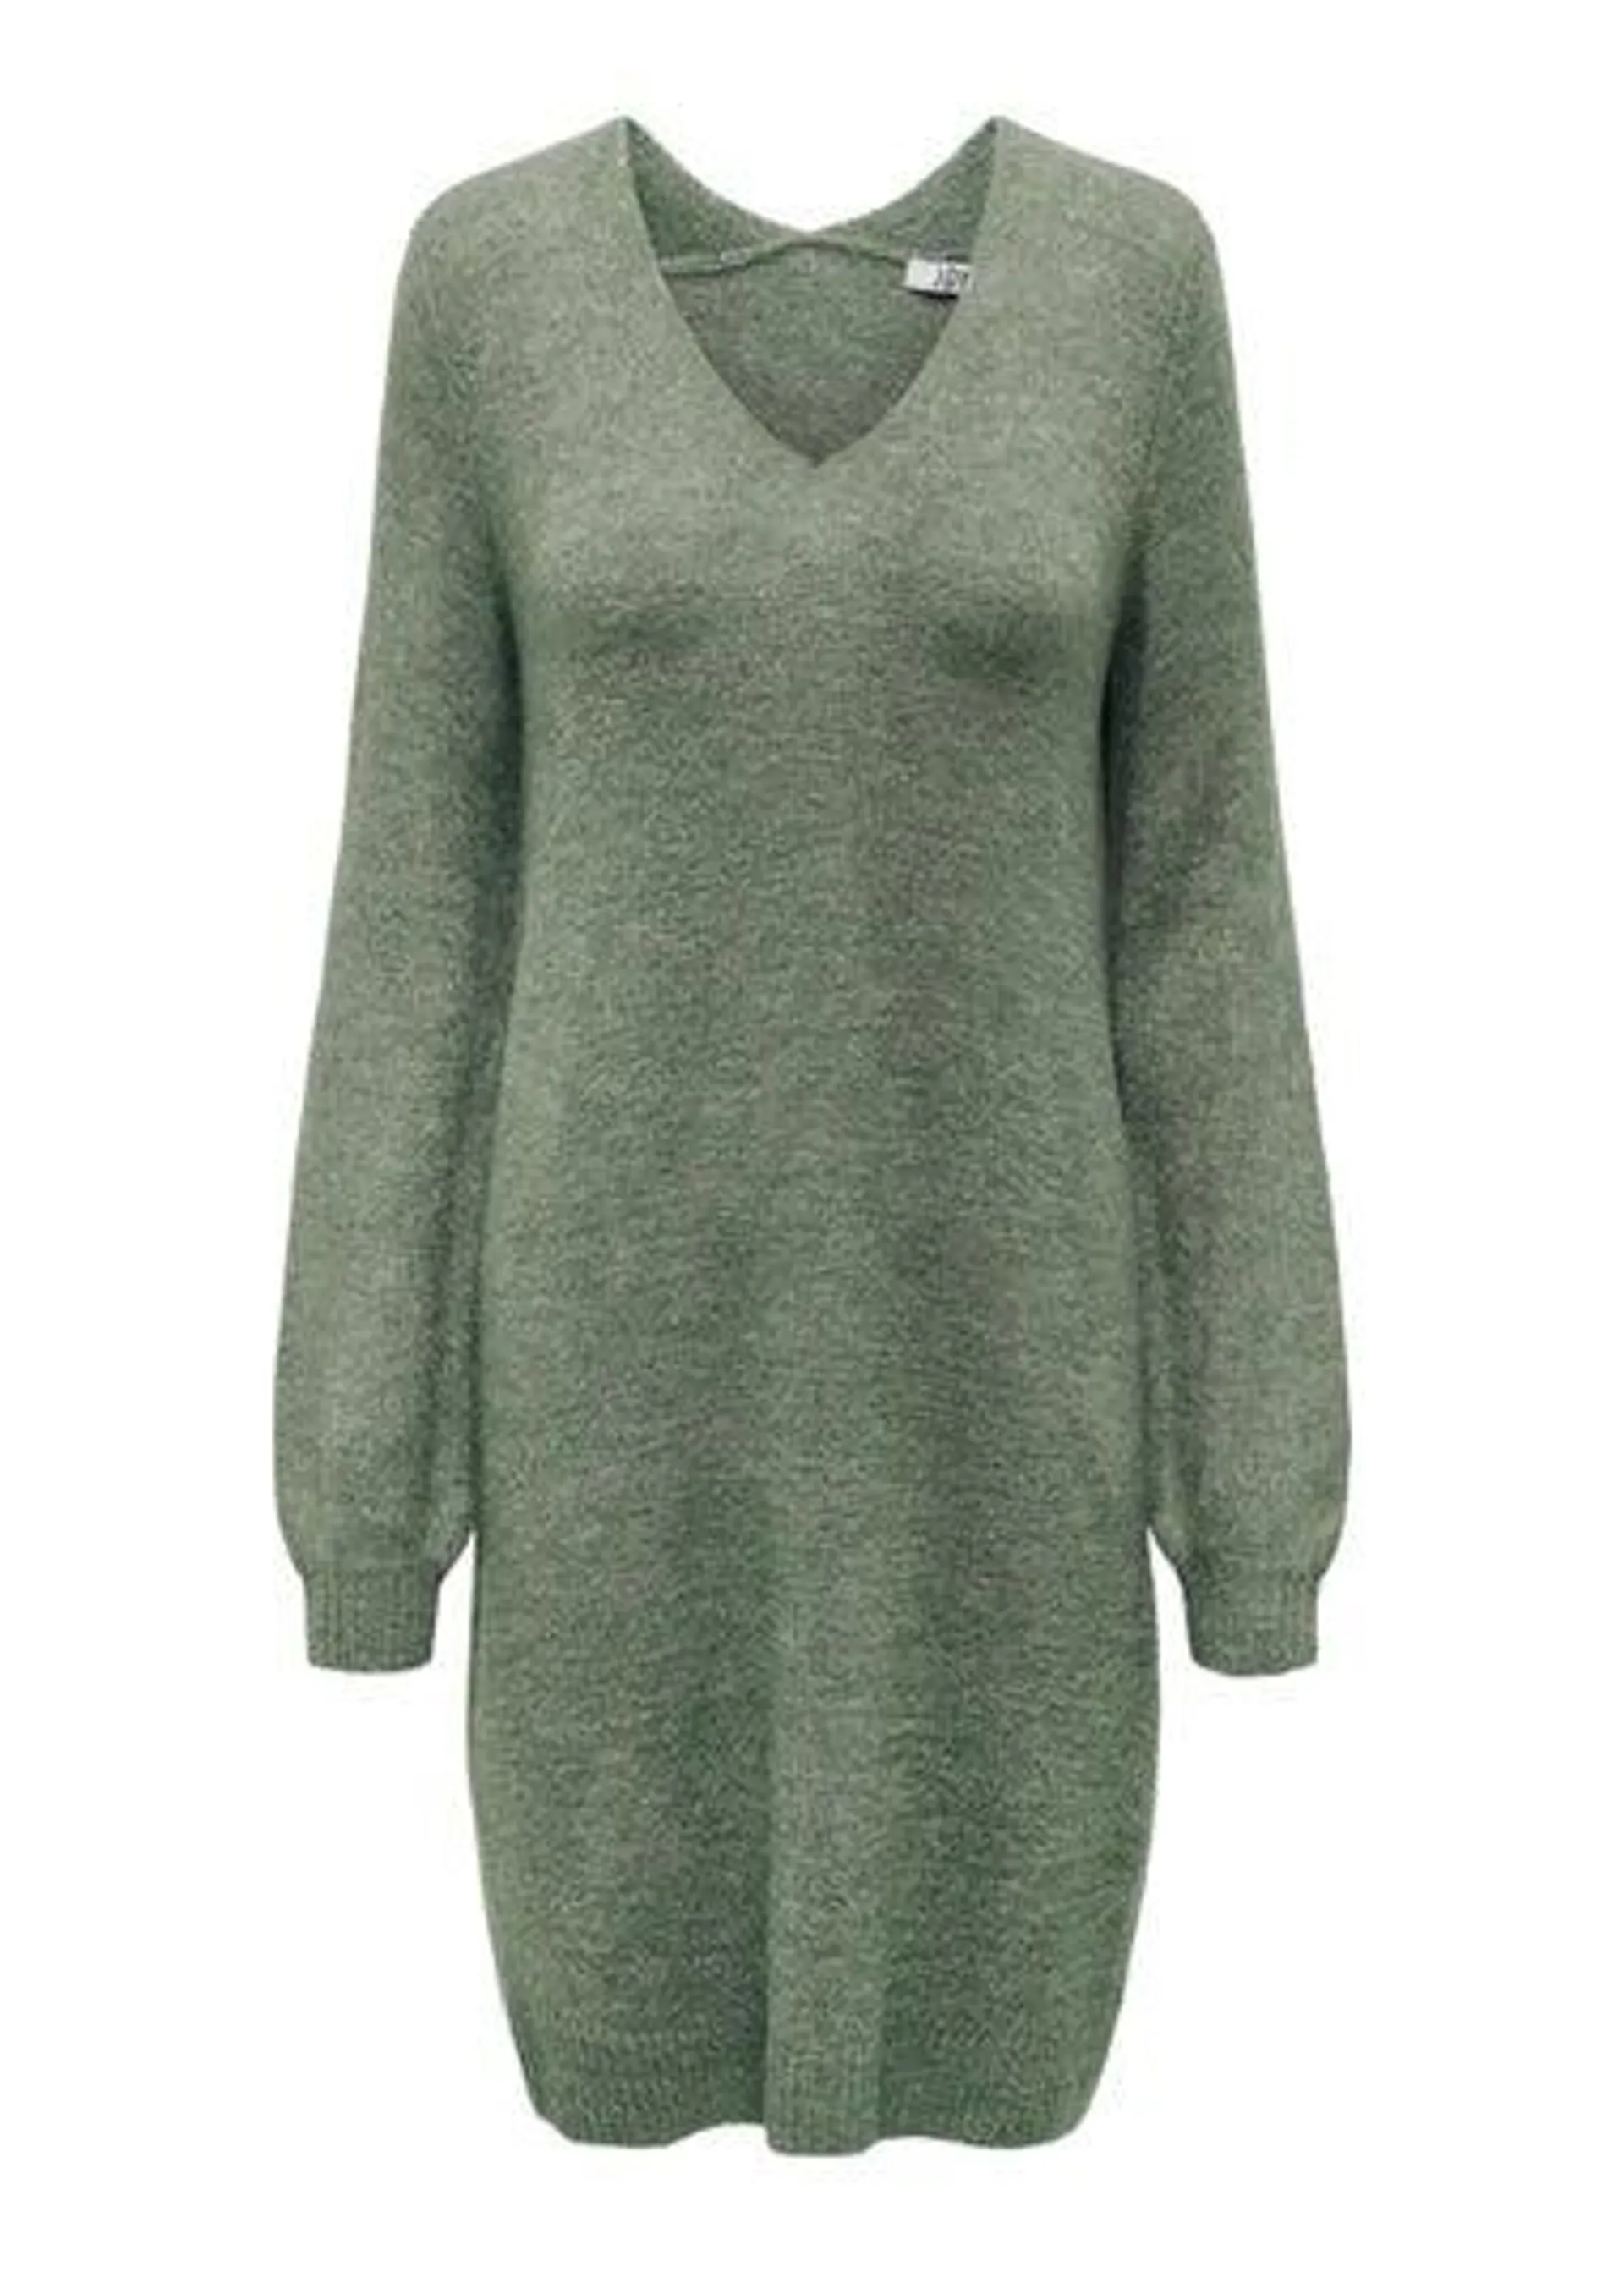 JDY Elanora Green Long Sleeve Dress - S - UK 8